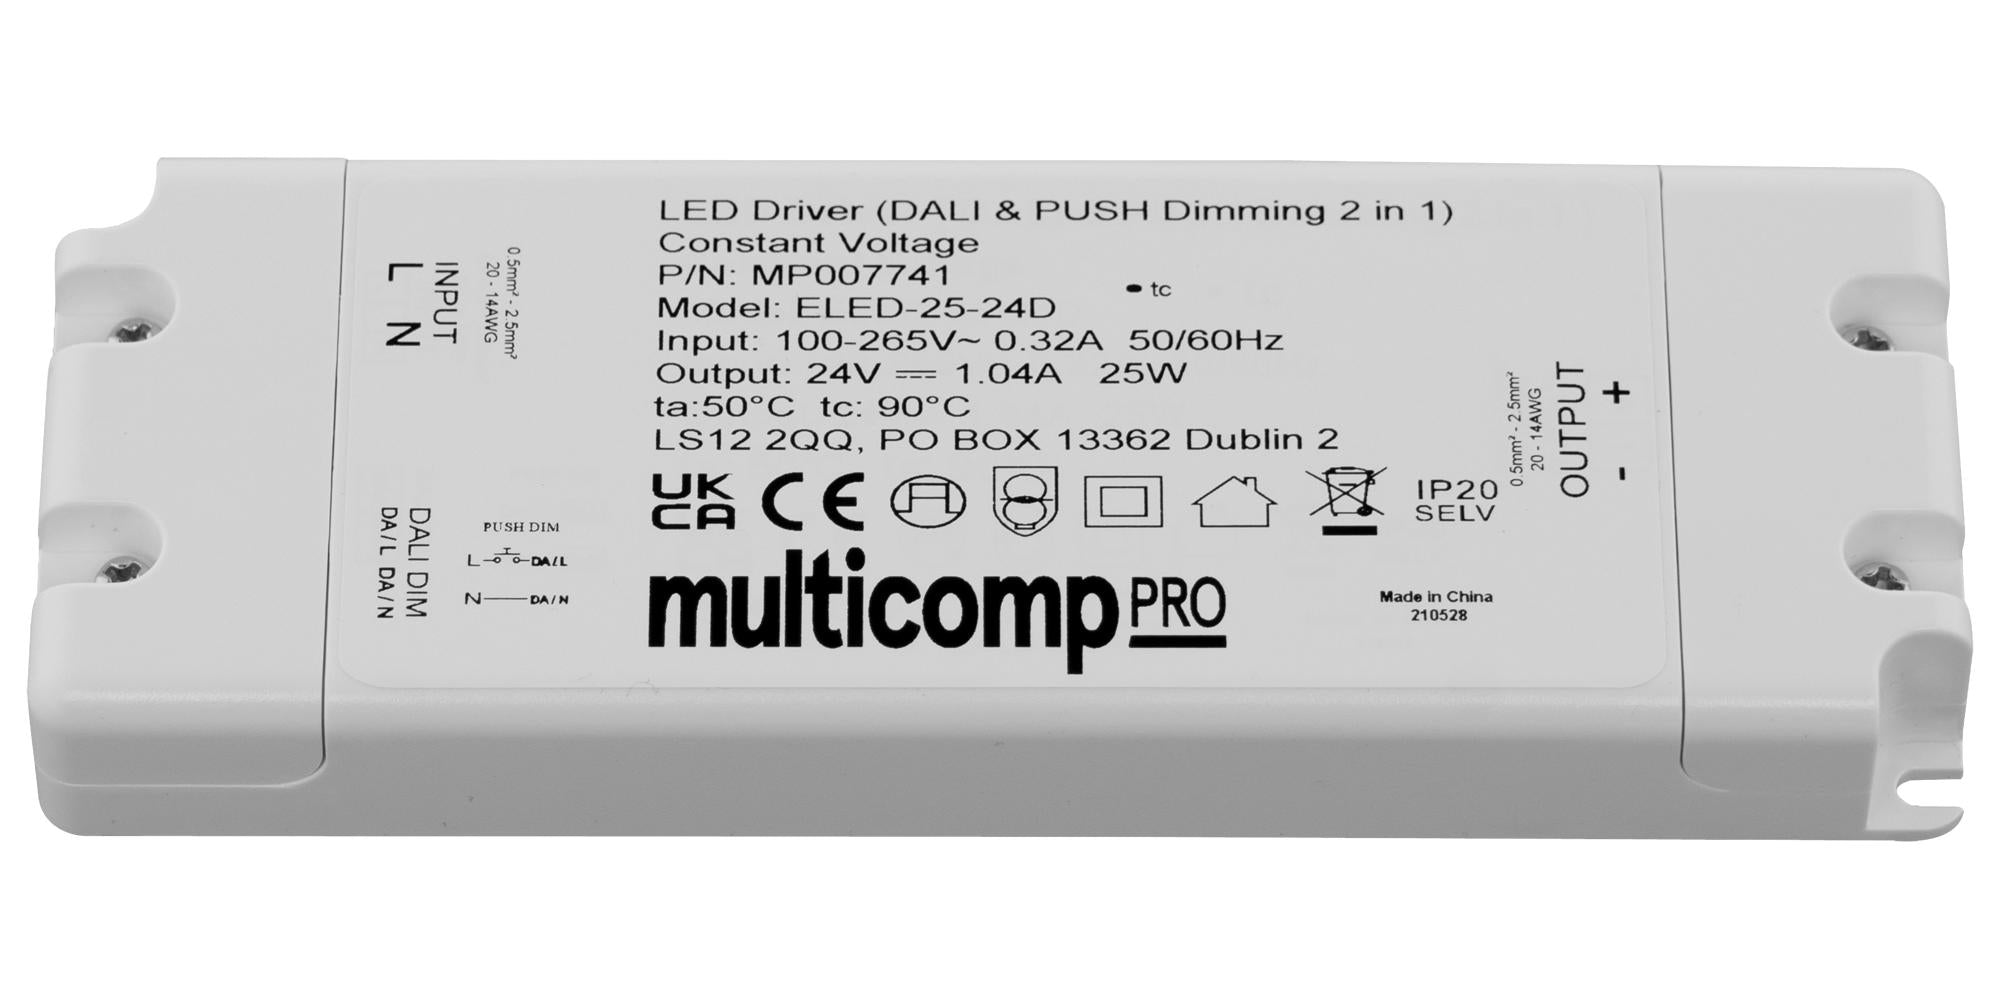 MP007741 LED DRIVER, CONSTANT VOLTAGE, 25W MULTICOMP PRO